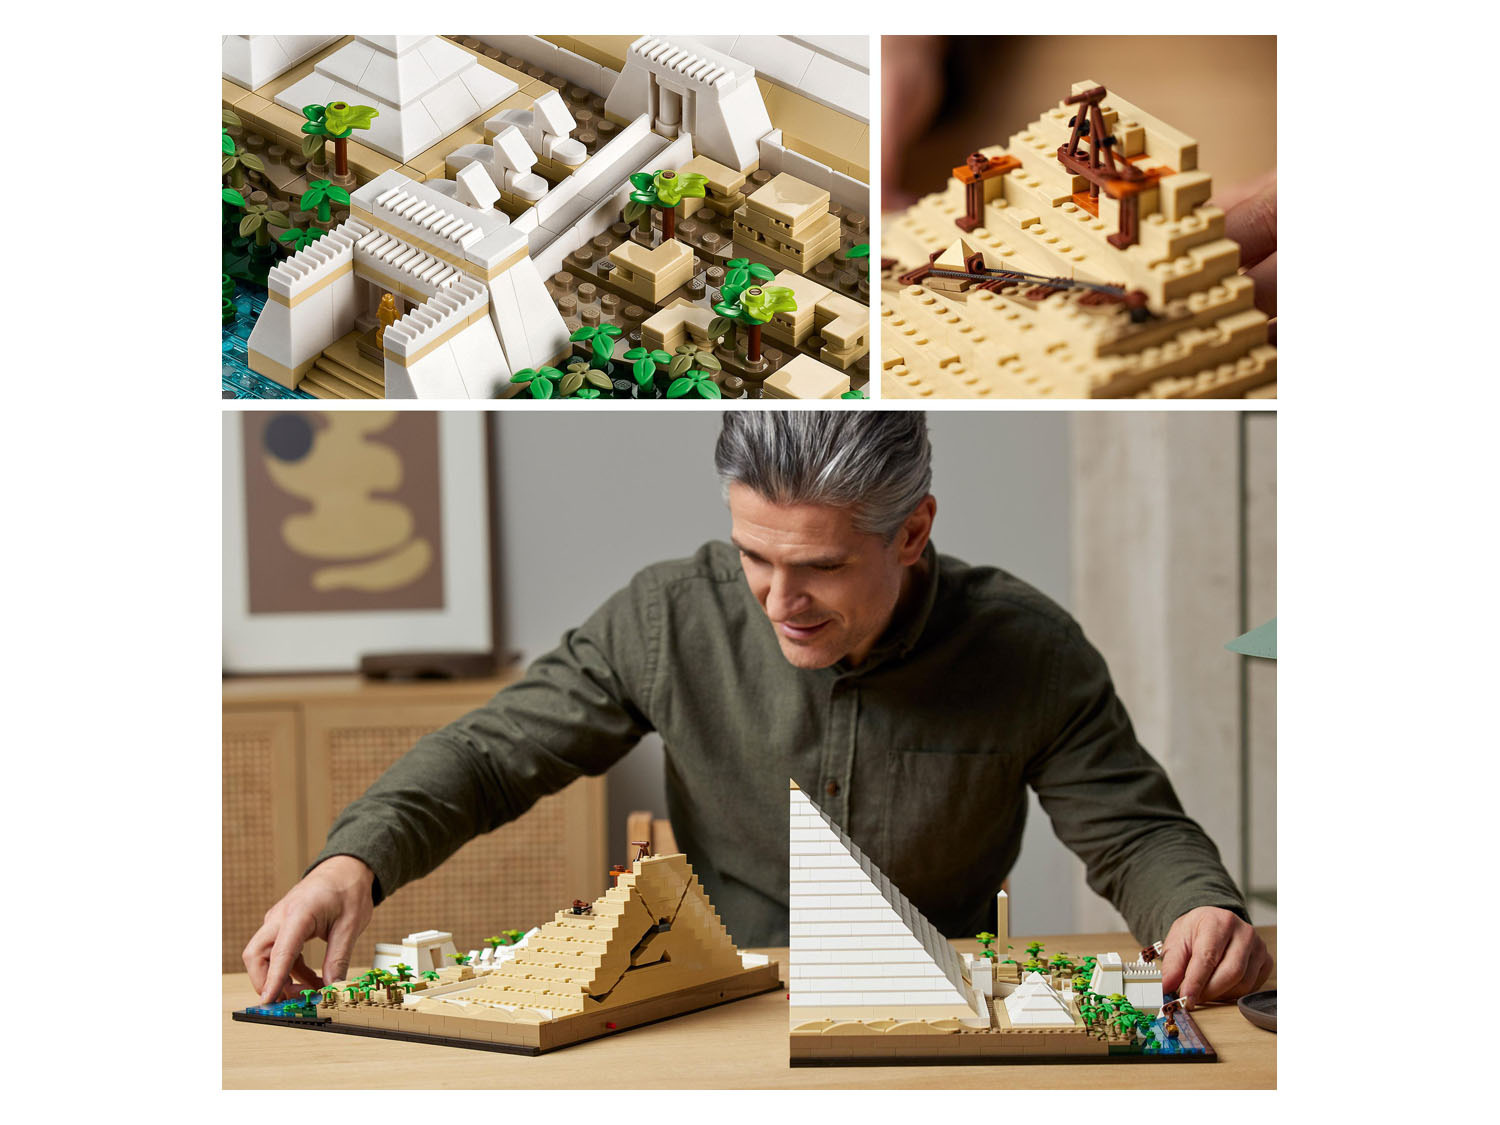 Construisez une grande pyramide LEGO complète de Gizeh avec un